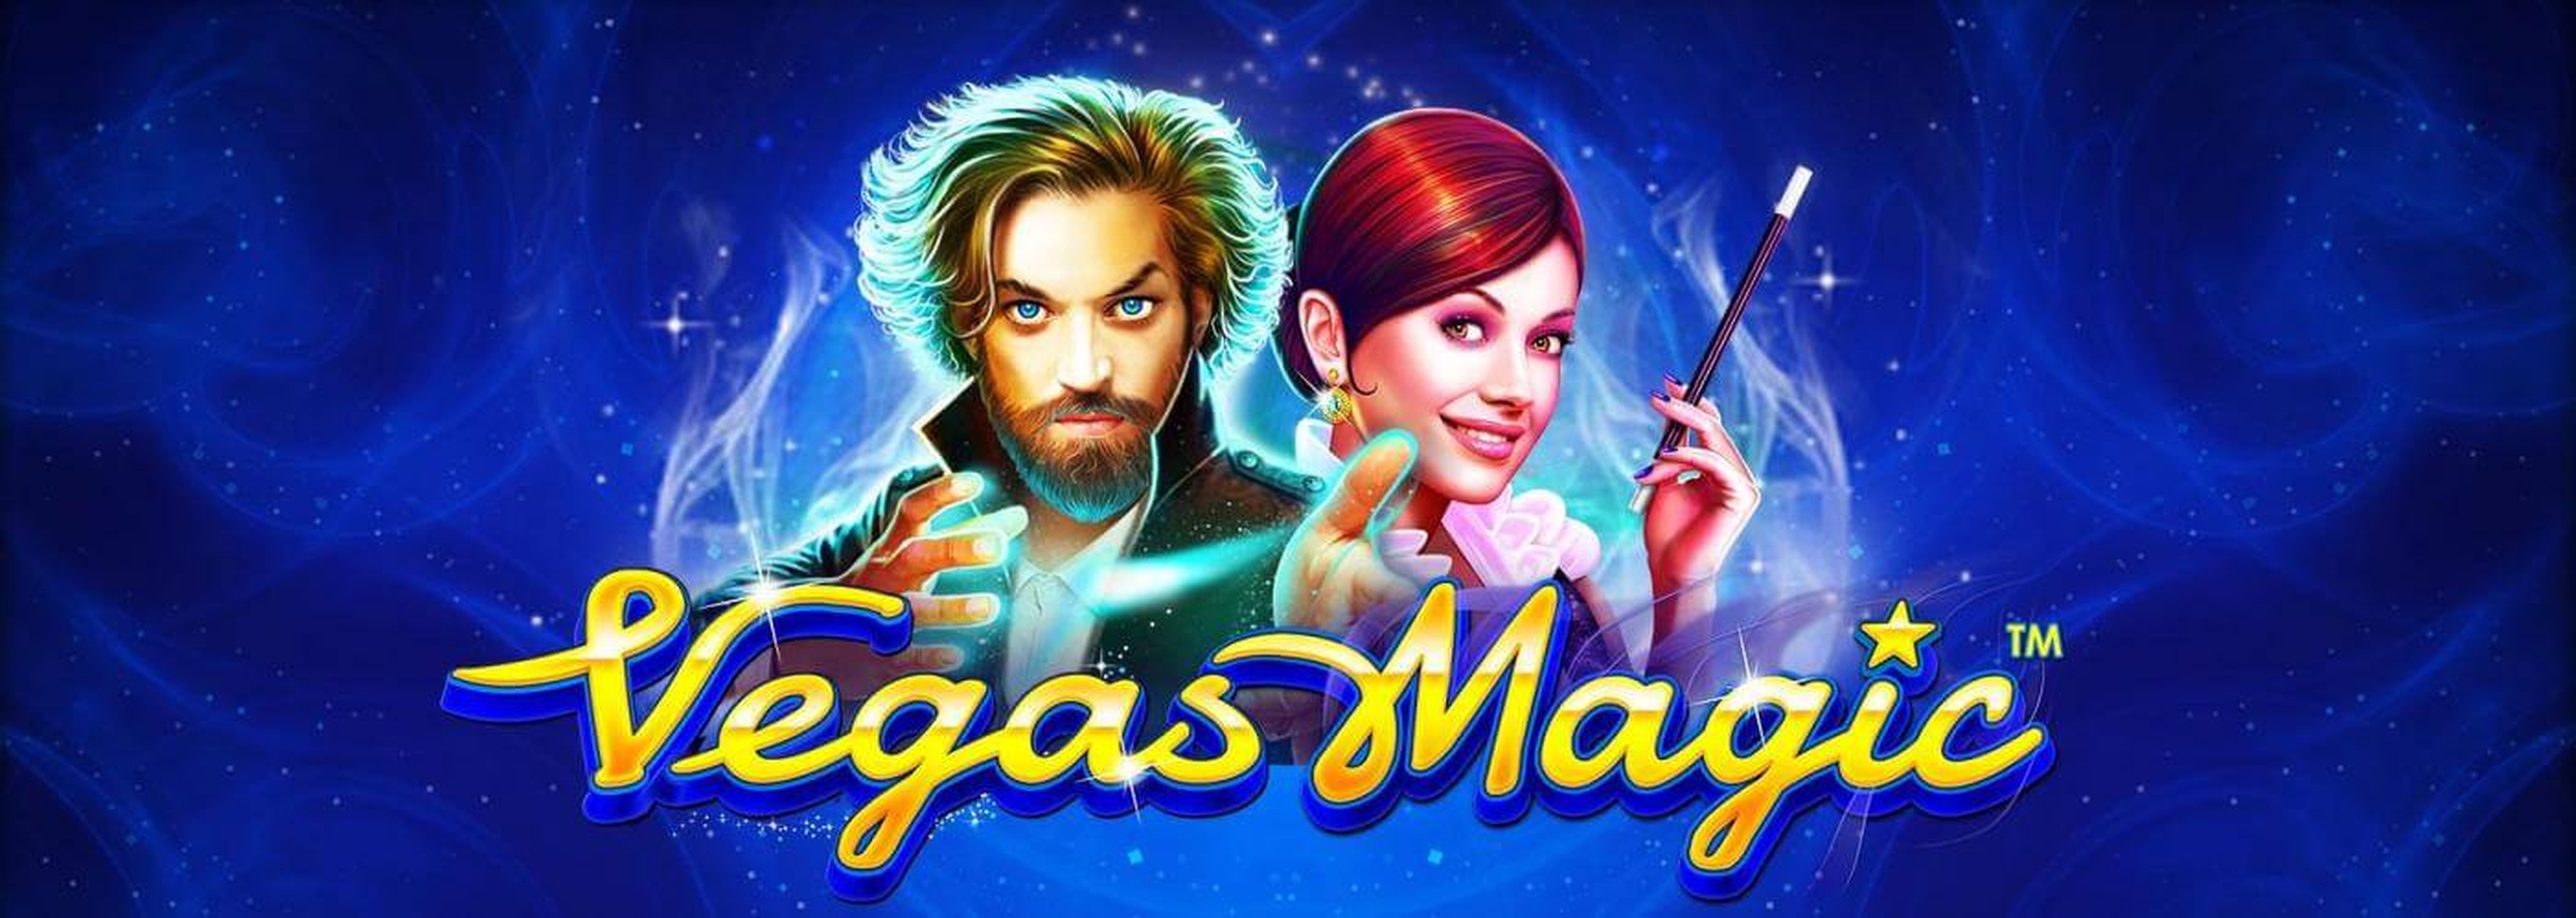 The Vegas Magic Online Slot Demo Game by Pragmatic Play